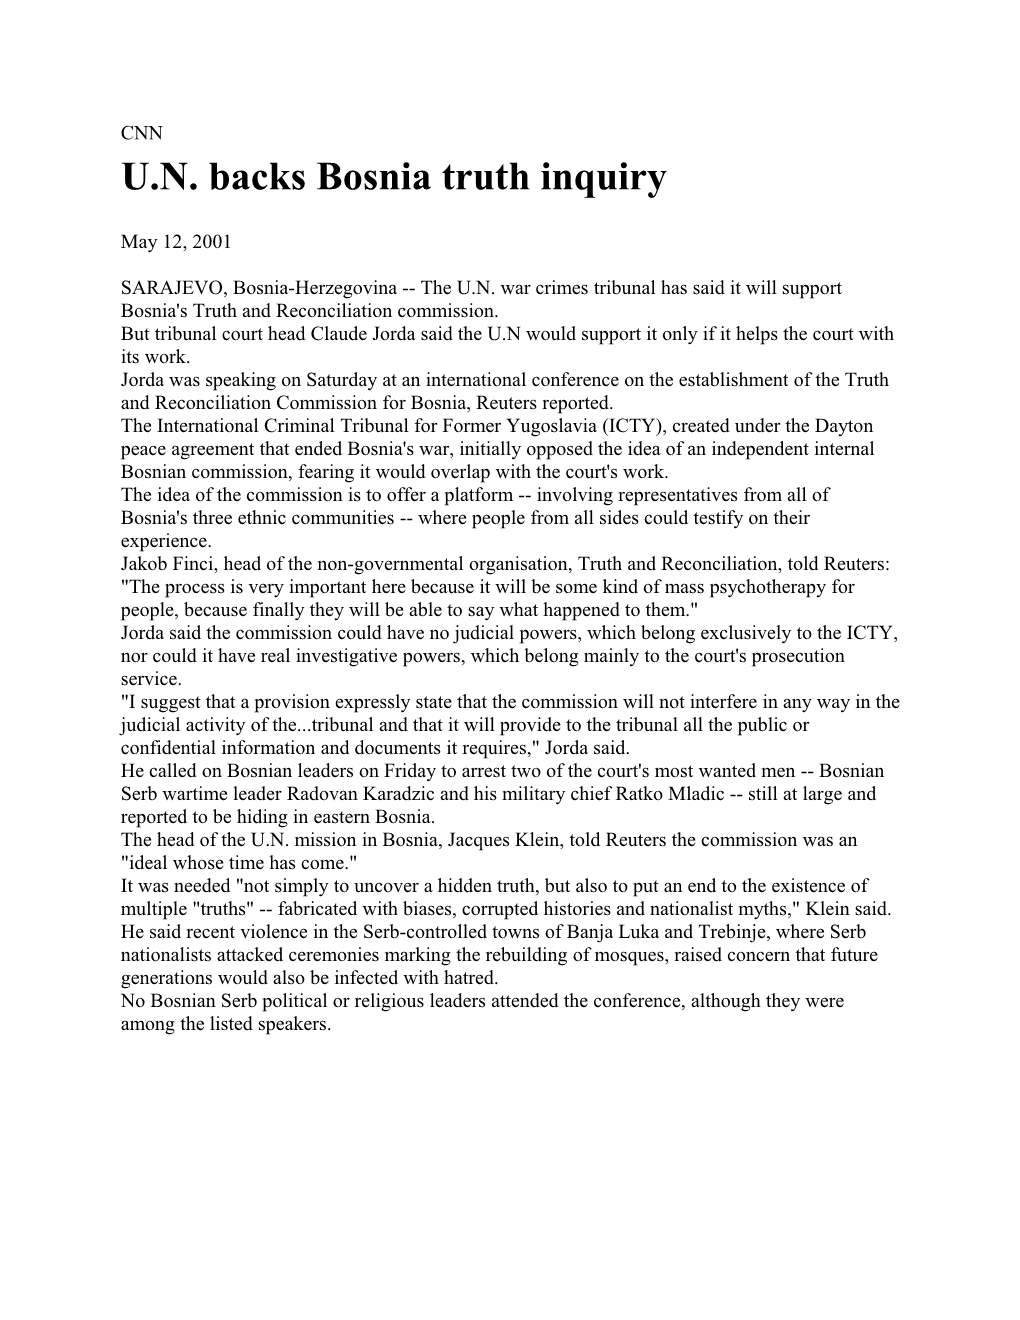 U.N. Backs Bosnia Truth Inquiry